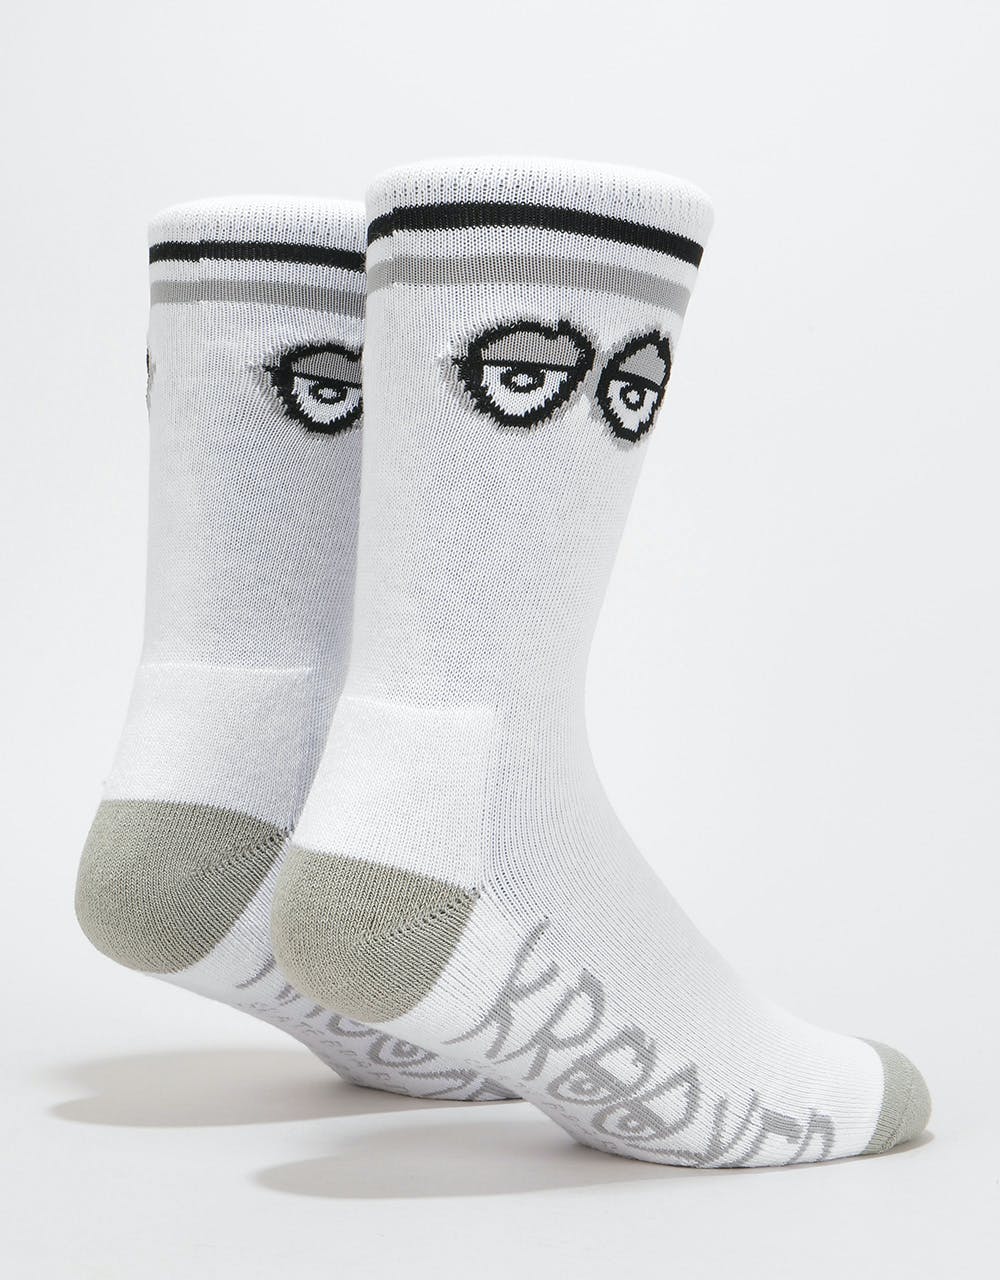 Krooked Big Eyes Socks - White/Grey/Black